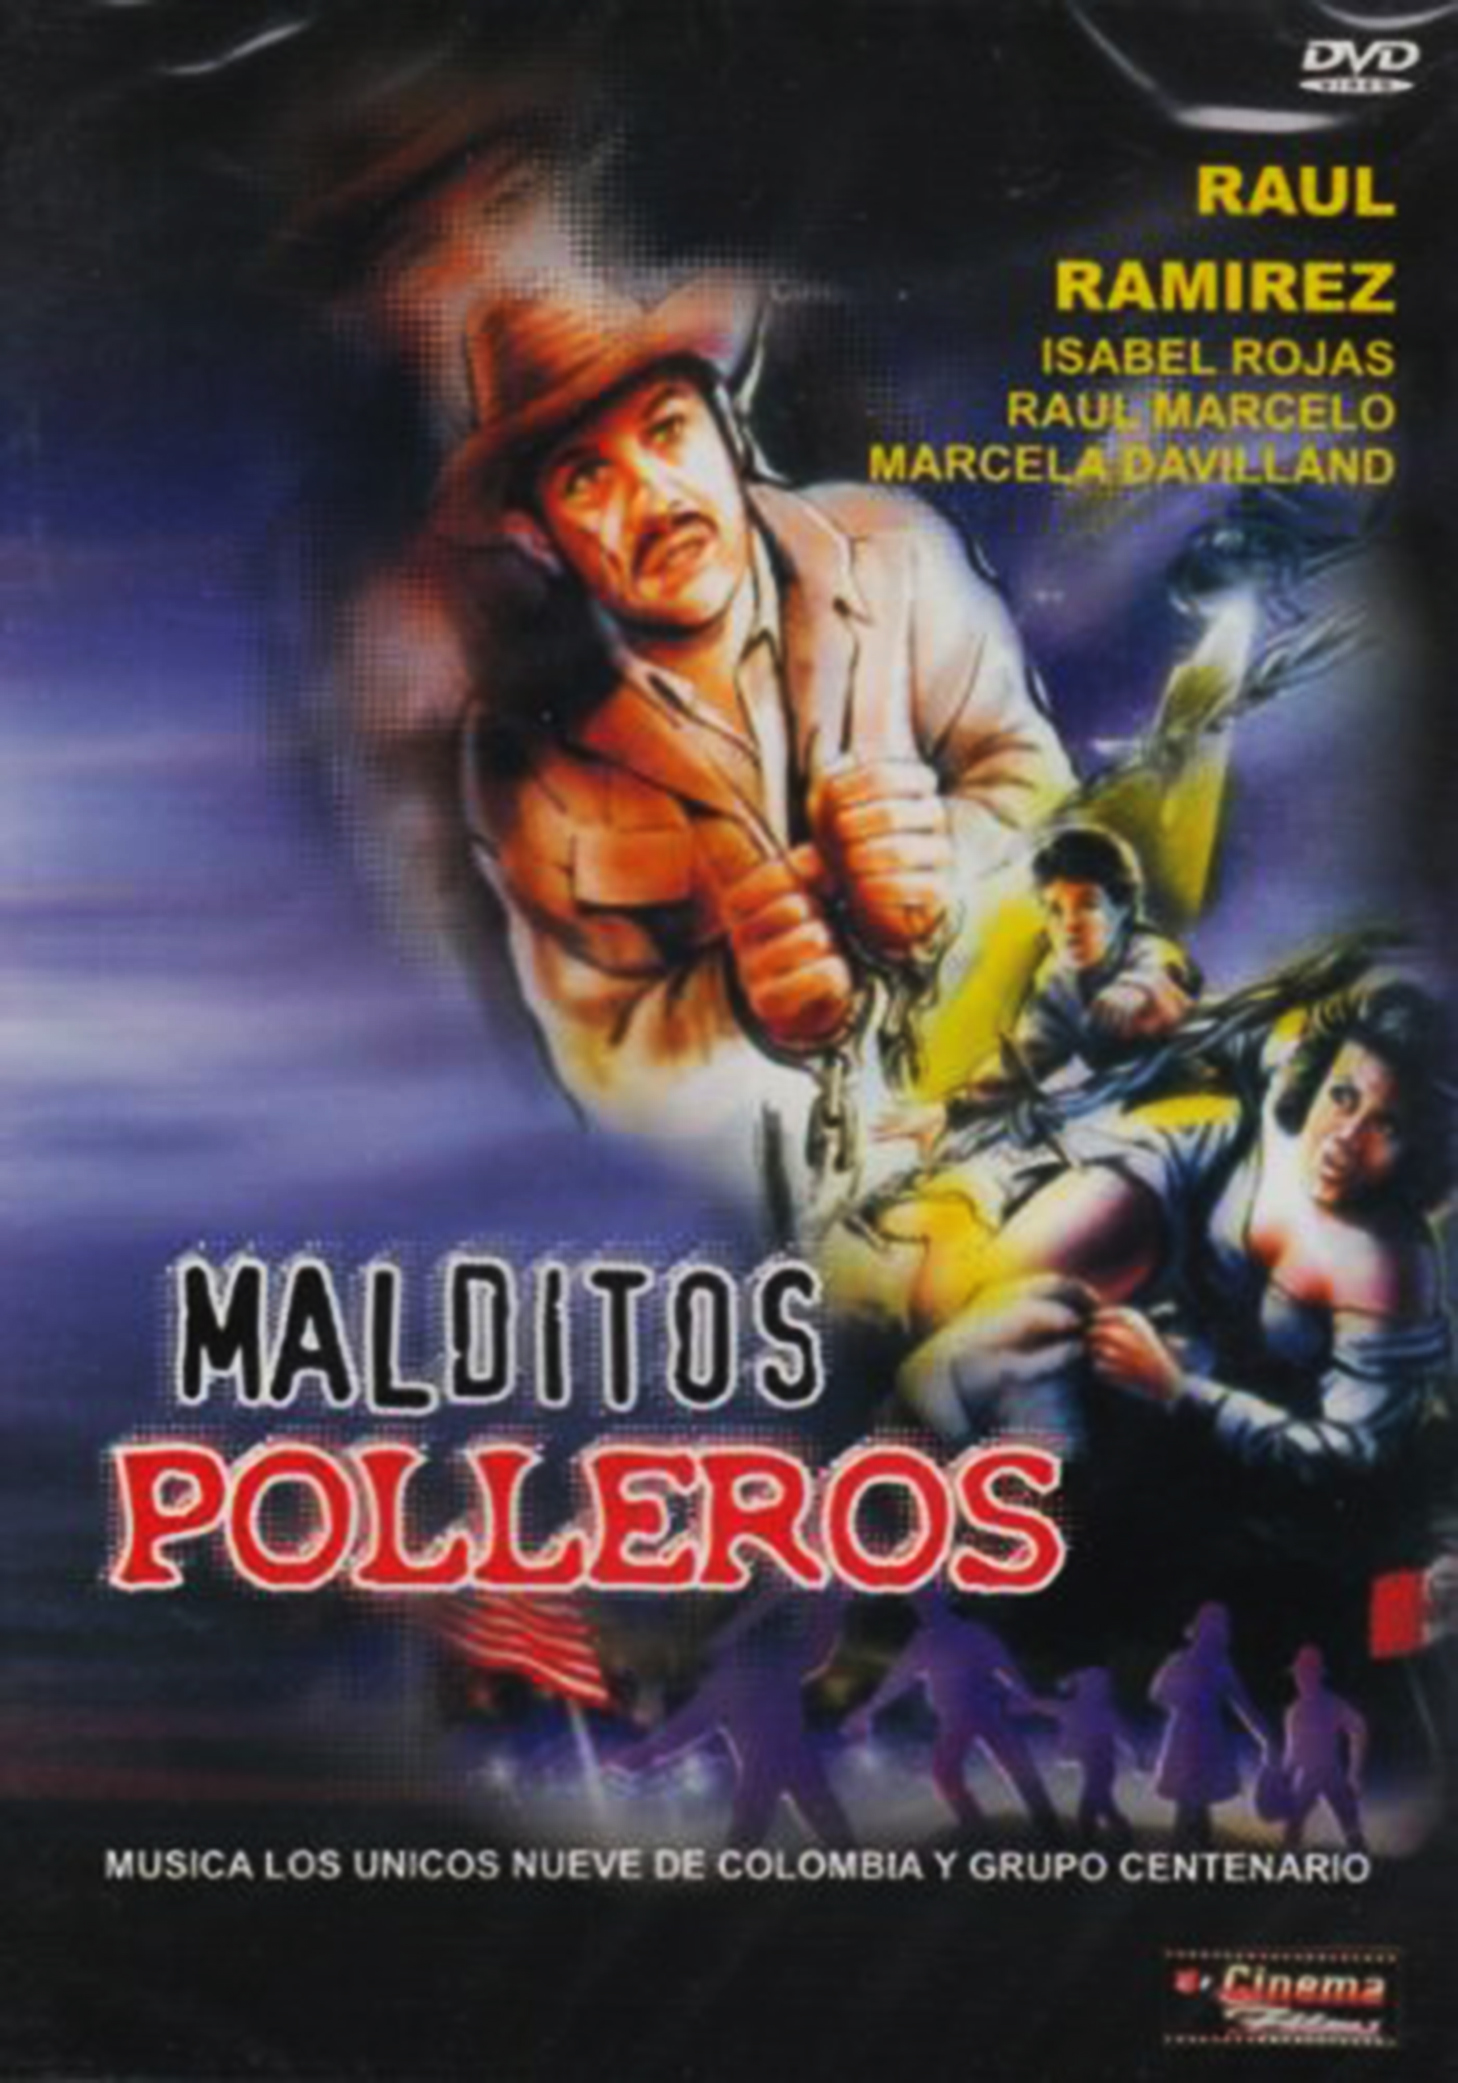 Malditos polleros (1985) Screenshot 1 